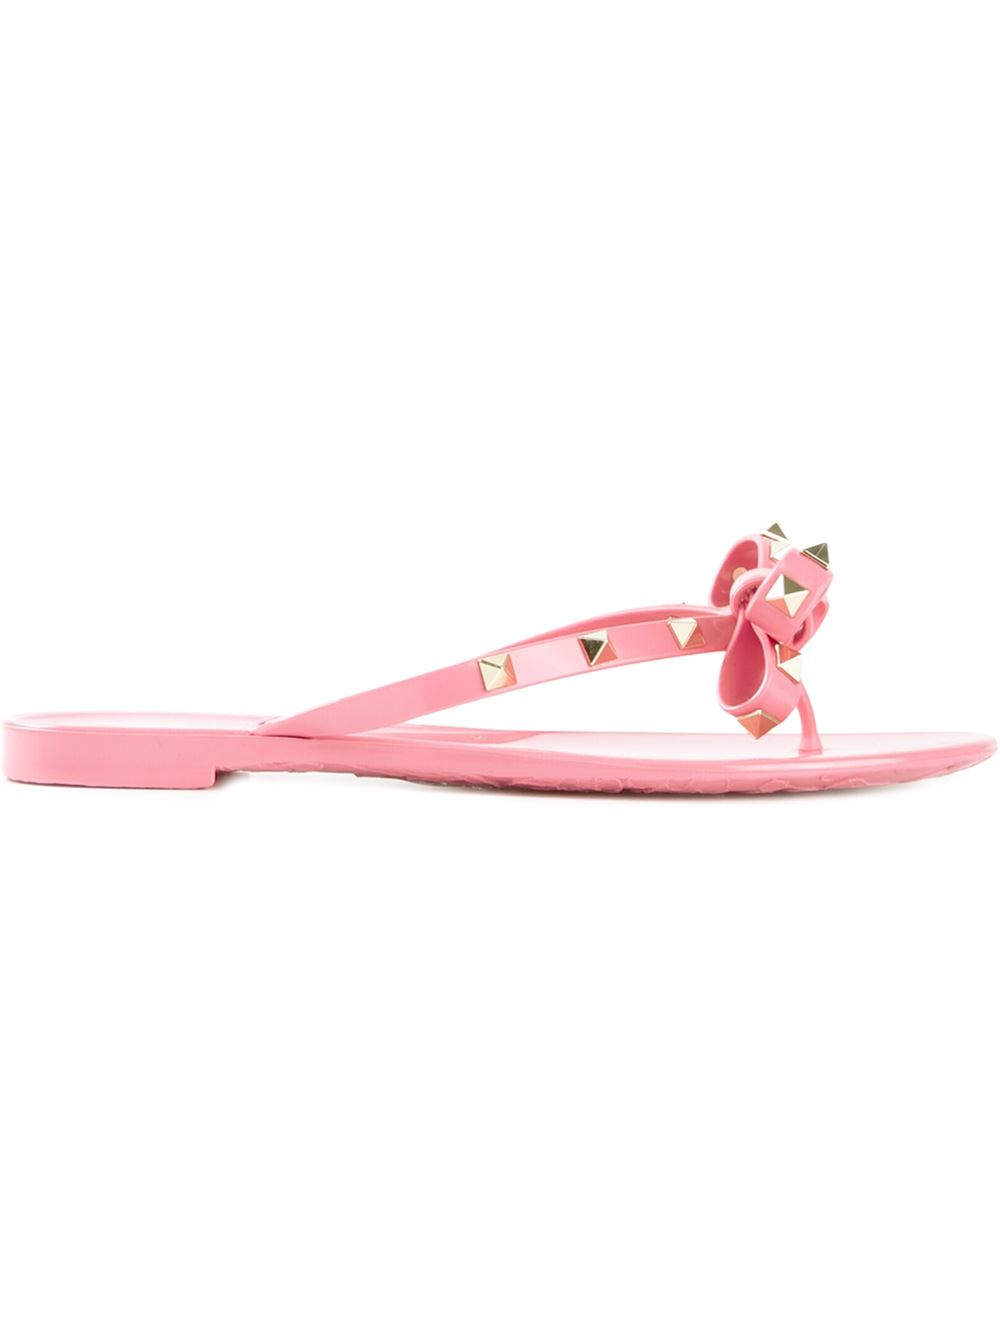 Lyst - Valentino Rockstud Flip Flops In Pink-7578